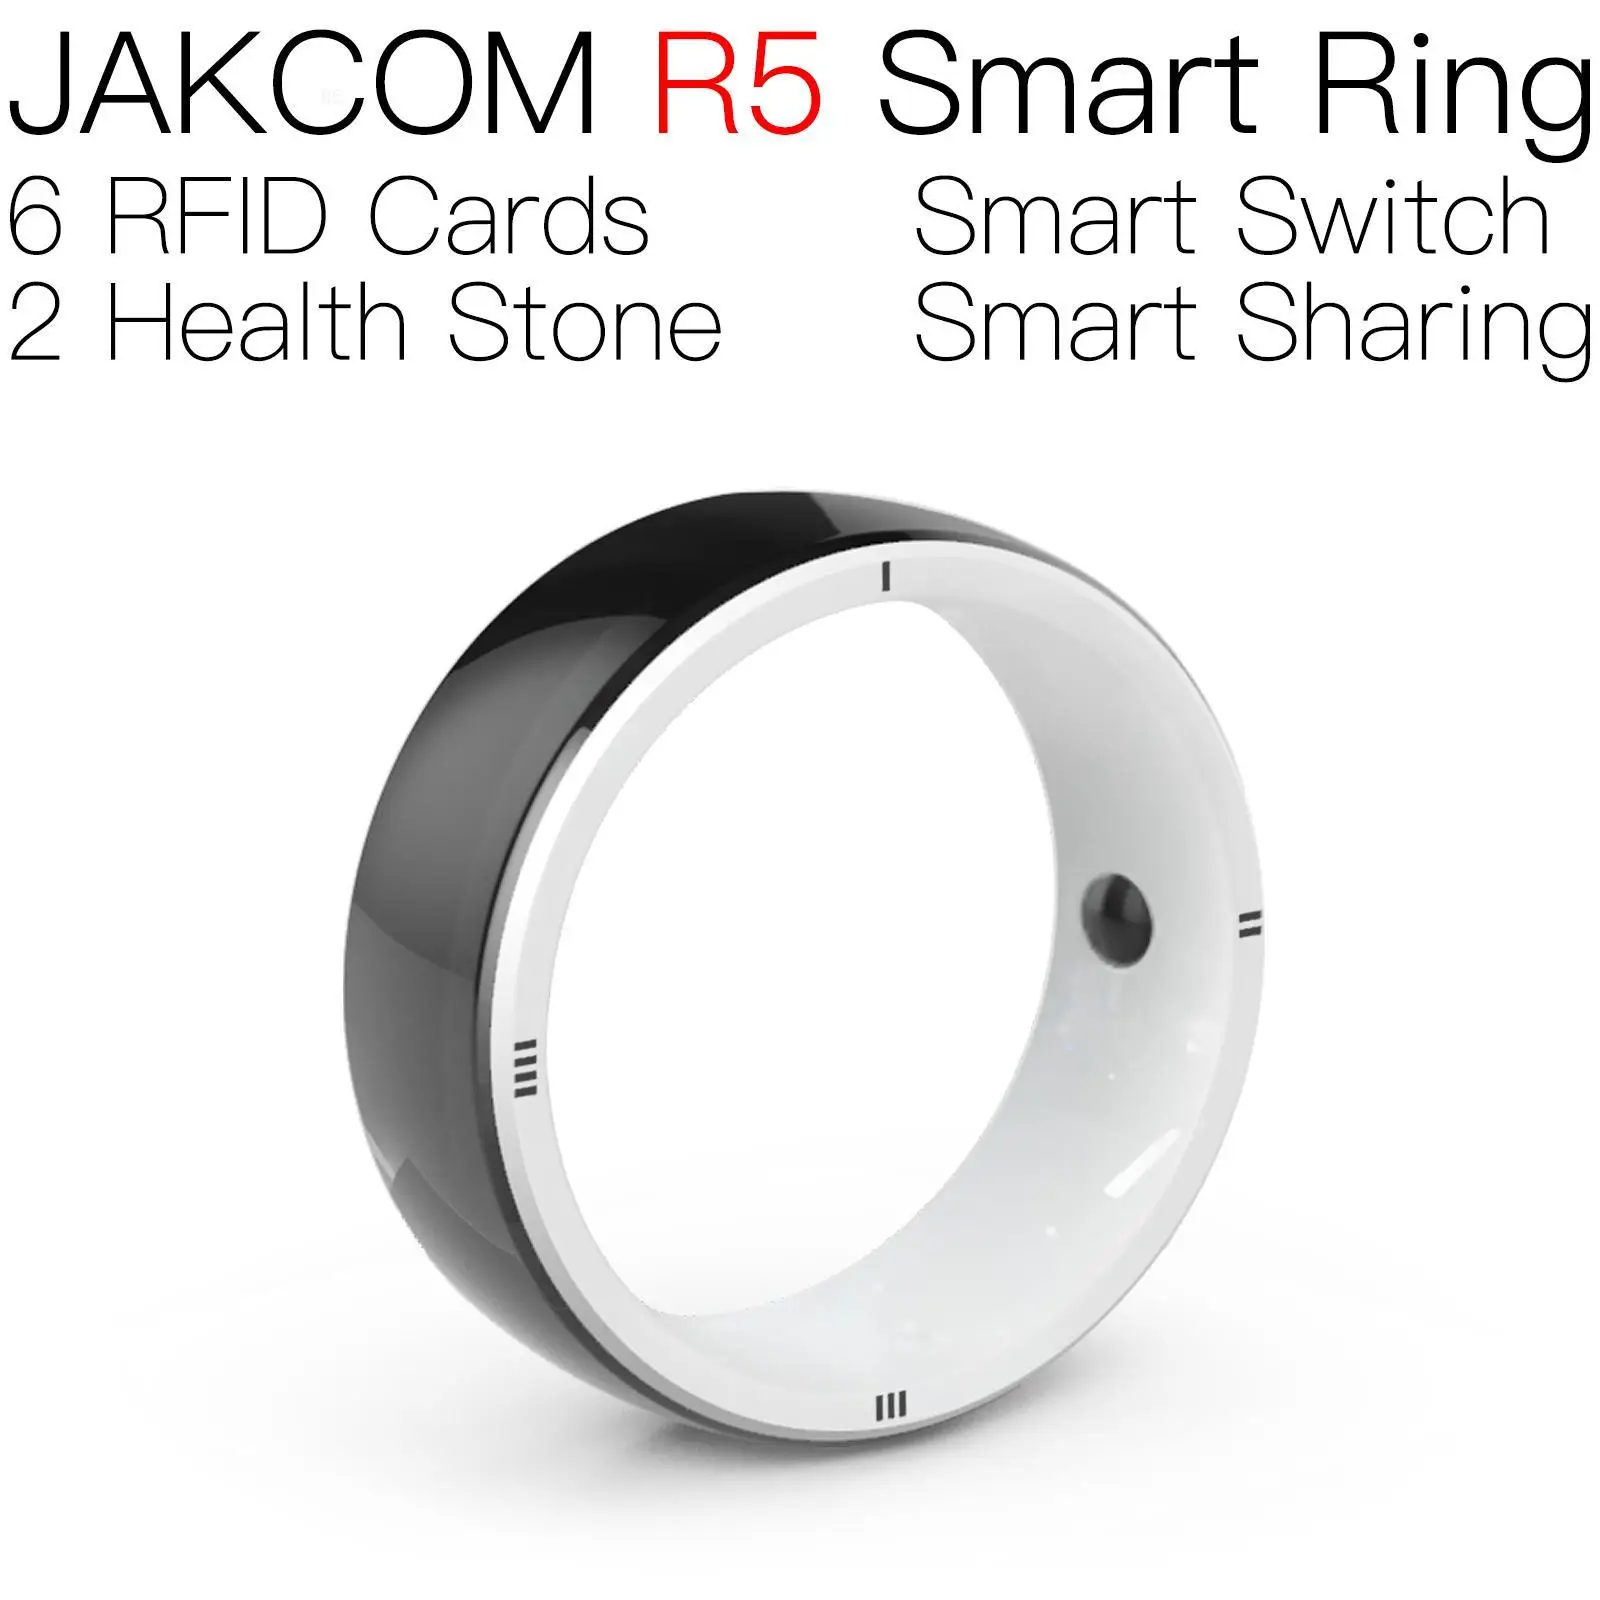 

JAKCOM R5 Smart Ring better than label sticker nfc nano tags key tag door tis epc esp32 escaner microchip monster hunter